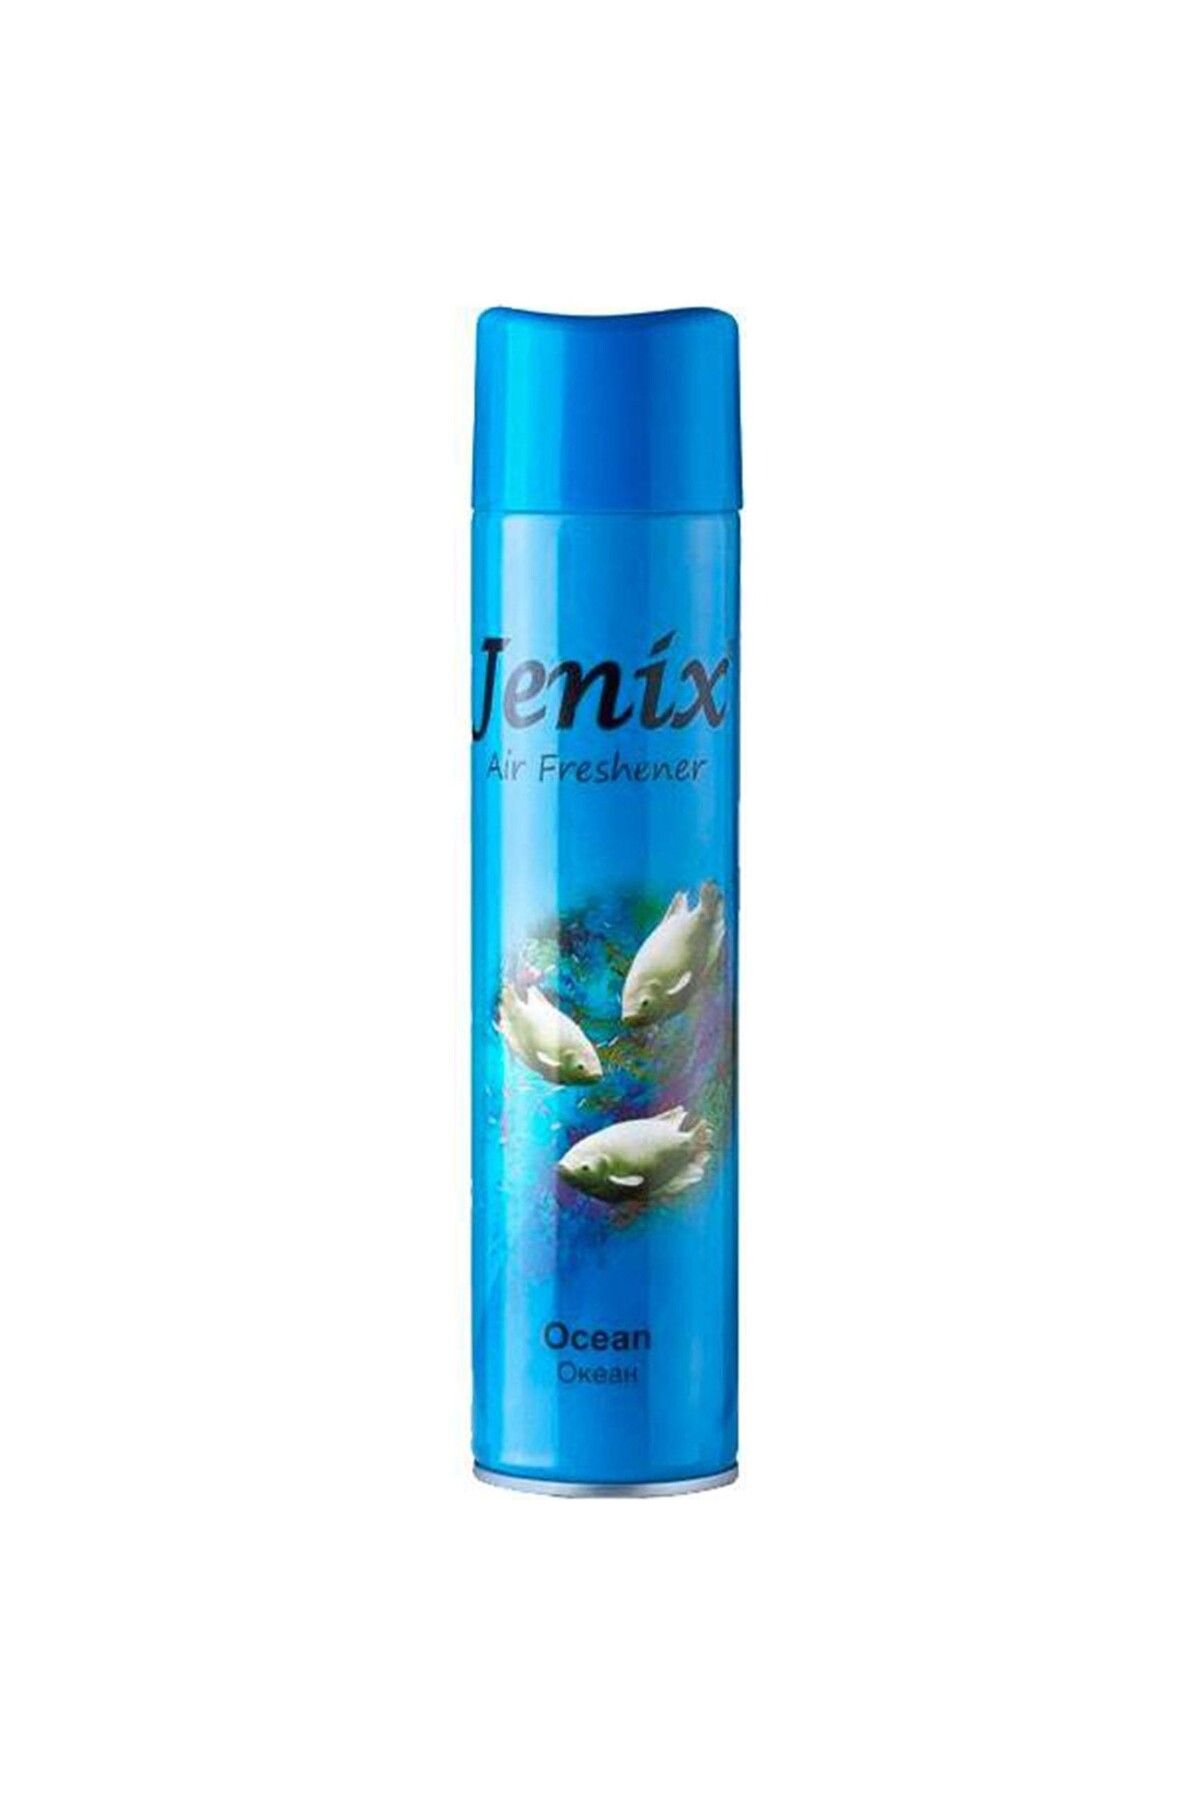 Jenix Air Freshner Sprey Ocean Deodorant Oda Ortam Kokusu Parfümü